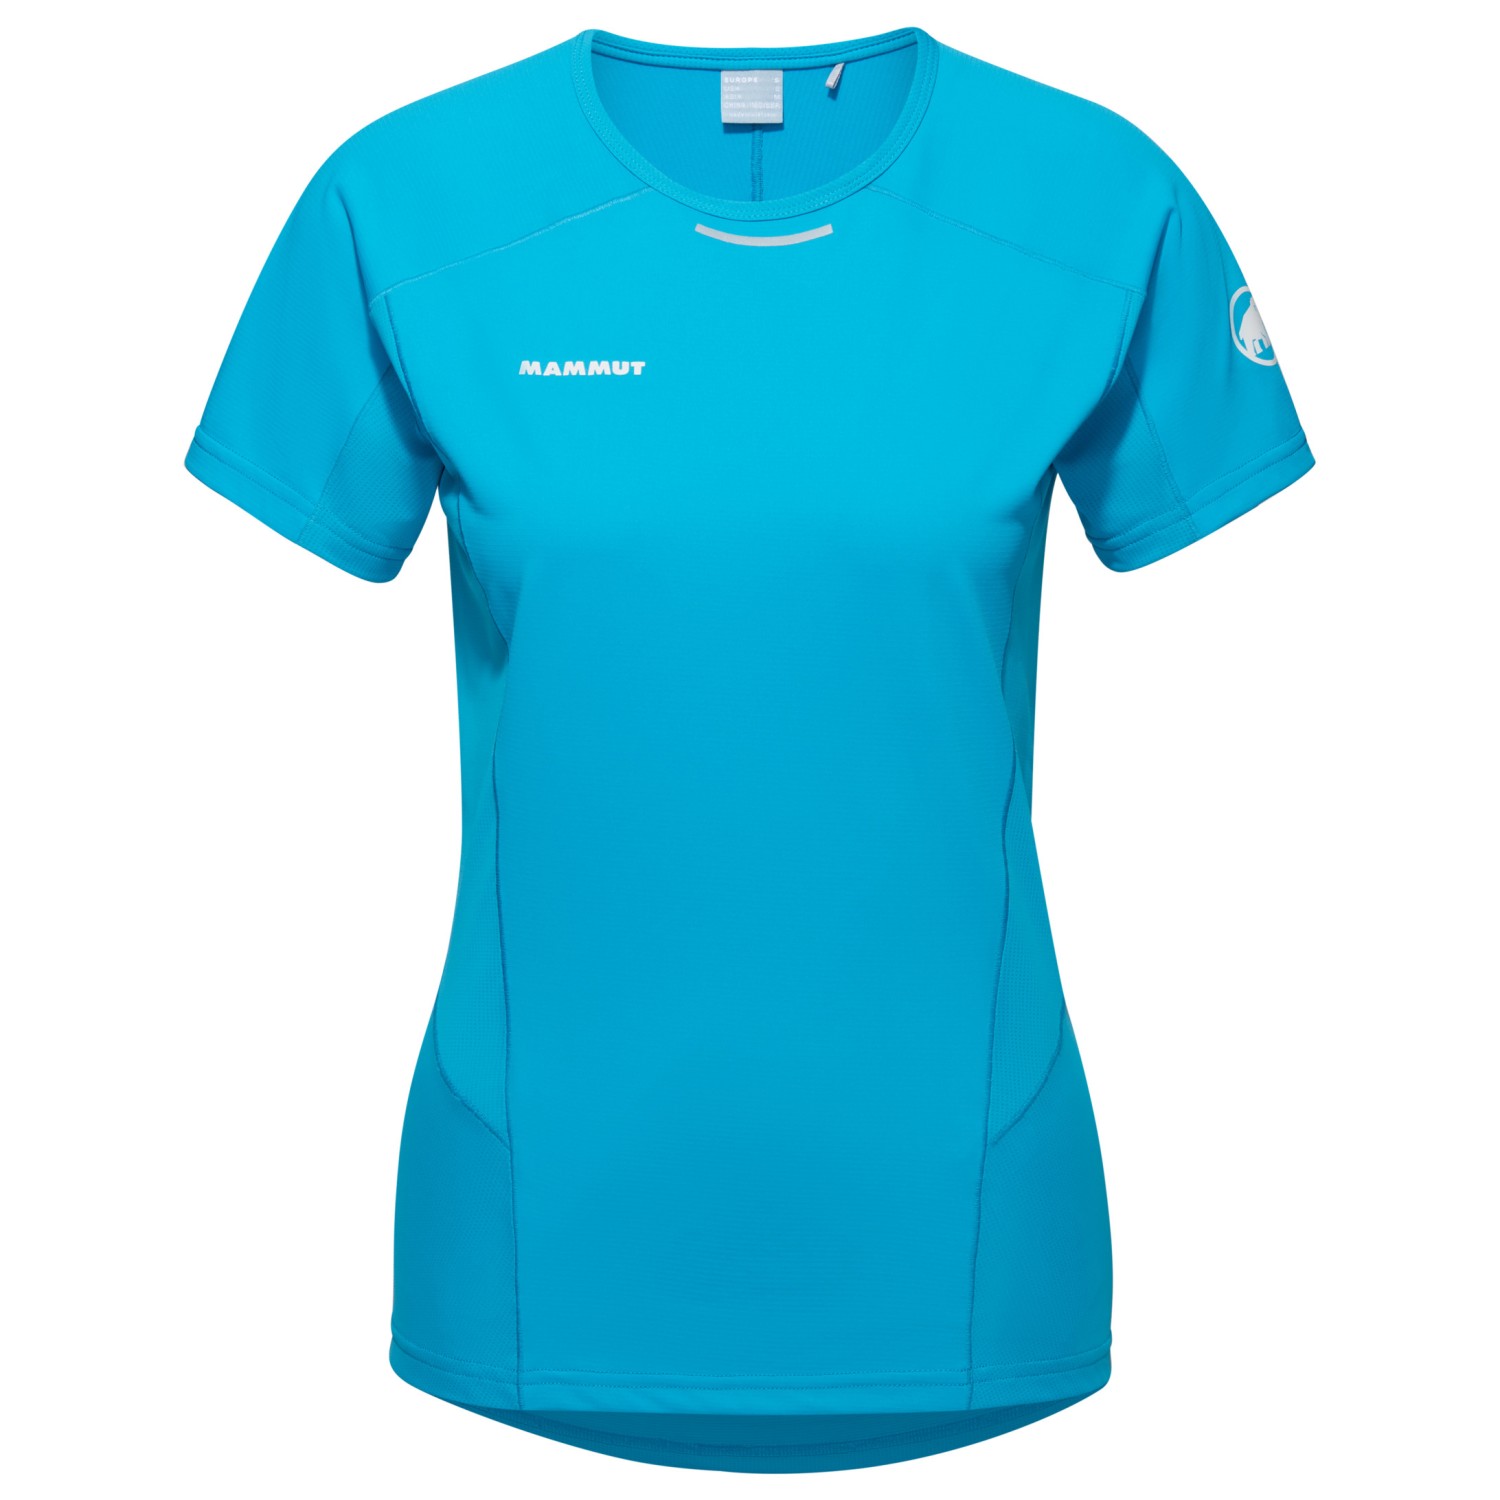 Функциональная рубашка Mammut Women's Aenergy FL T Shirt, небесно голубой футболка базовая aenergy mammut цвет brick